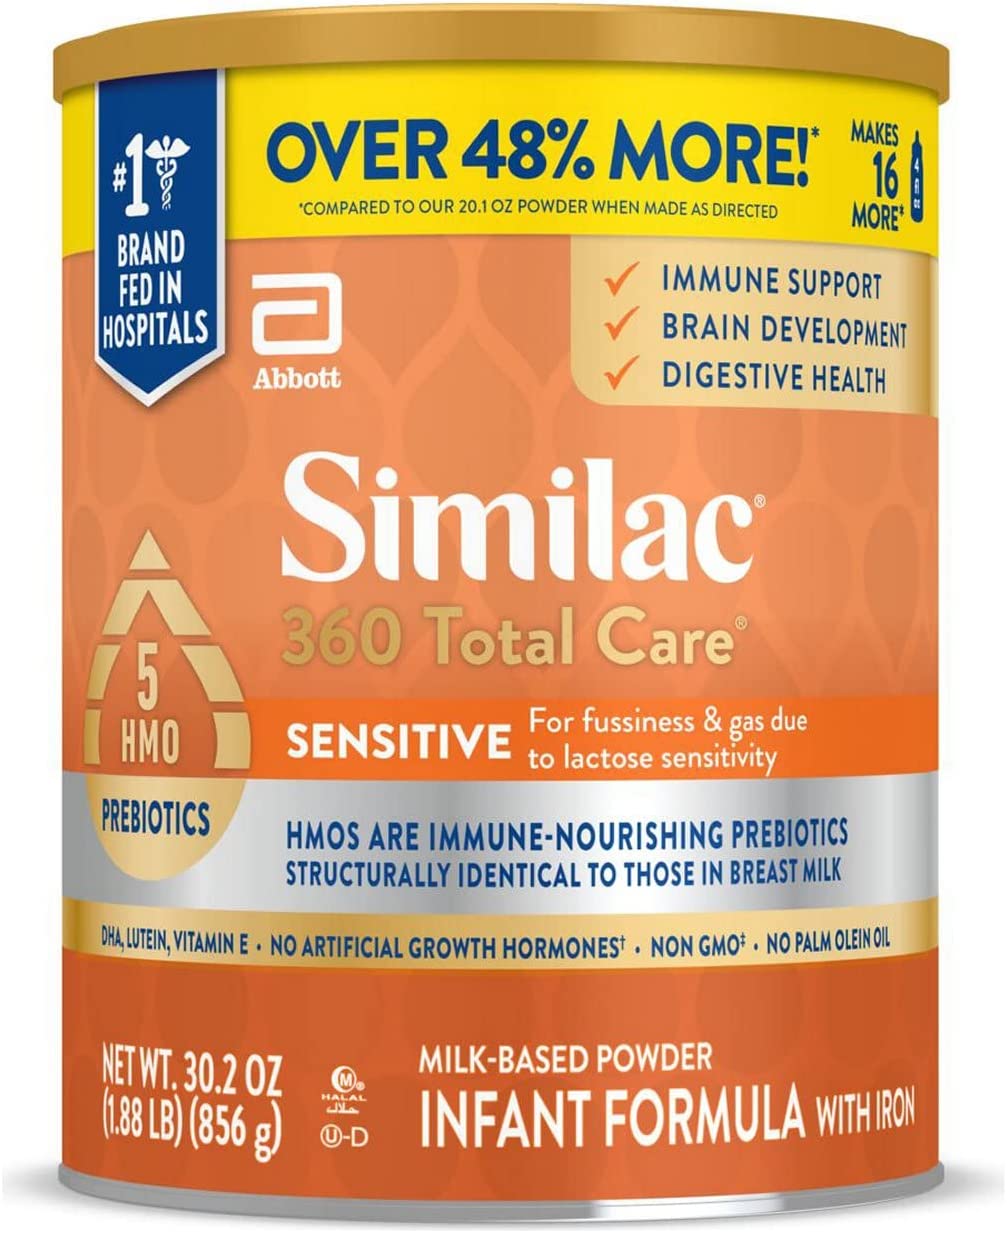 Similac 360 Total Care Sensitive Infant Formula, with 5 HMO Prebiotics, for Fussiness & Gas Due to Lactose Sensitivity, Non-GMO, Baby Formula Powder, 30.2-oz Can (Case of 6)